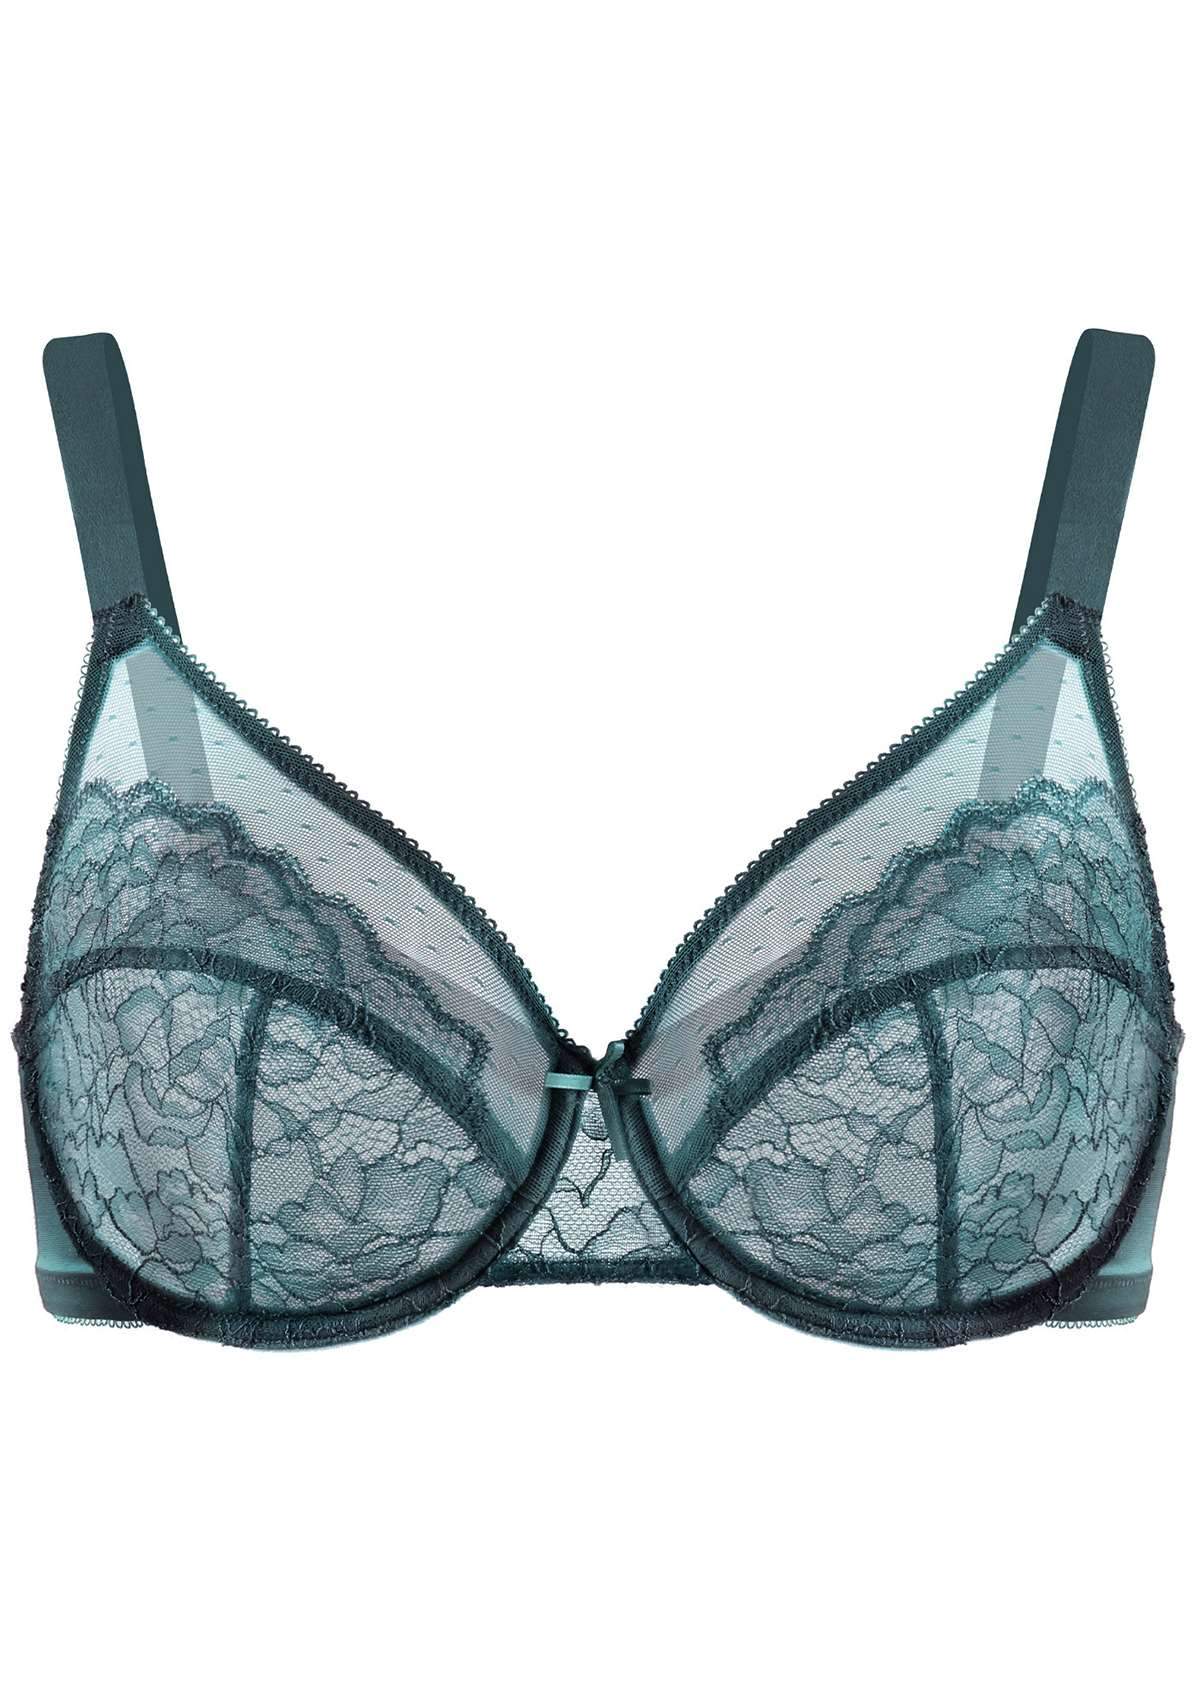 HSIA Enchante Bra And Underwear Set: Sexy, Comfortable See-Through Bra - Balsam Blue / 36 / DDD/F